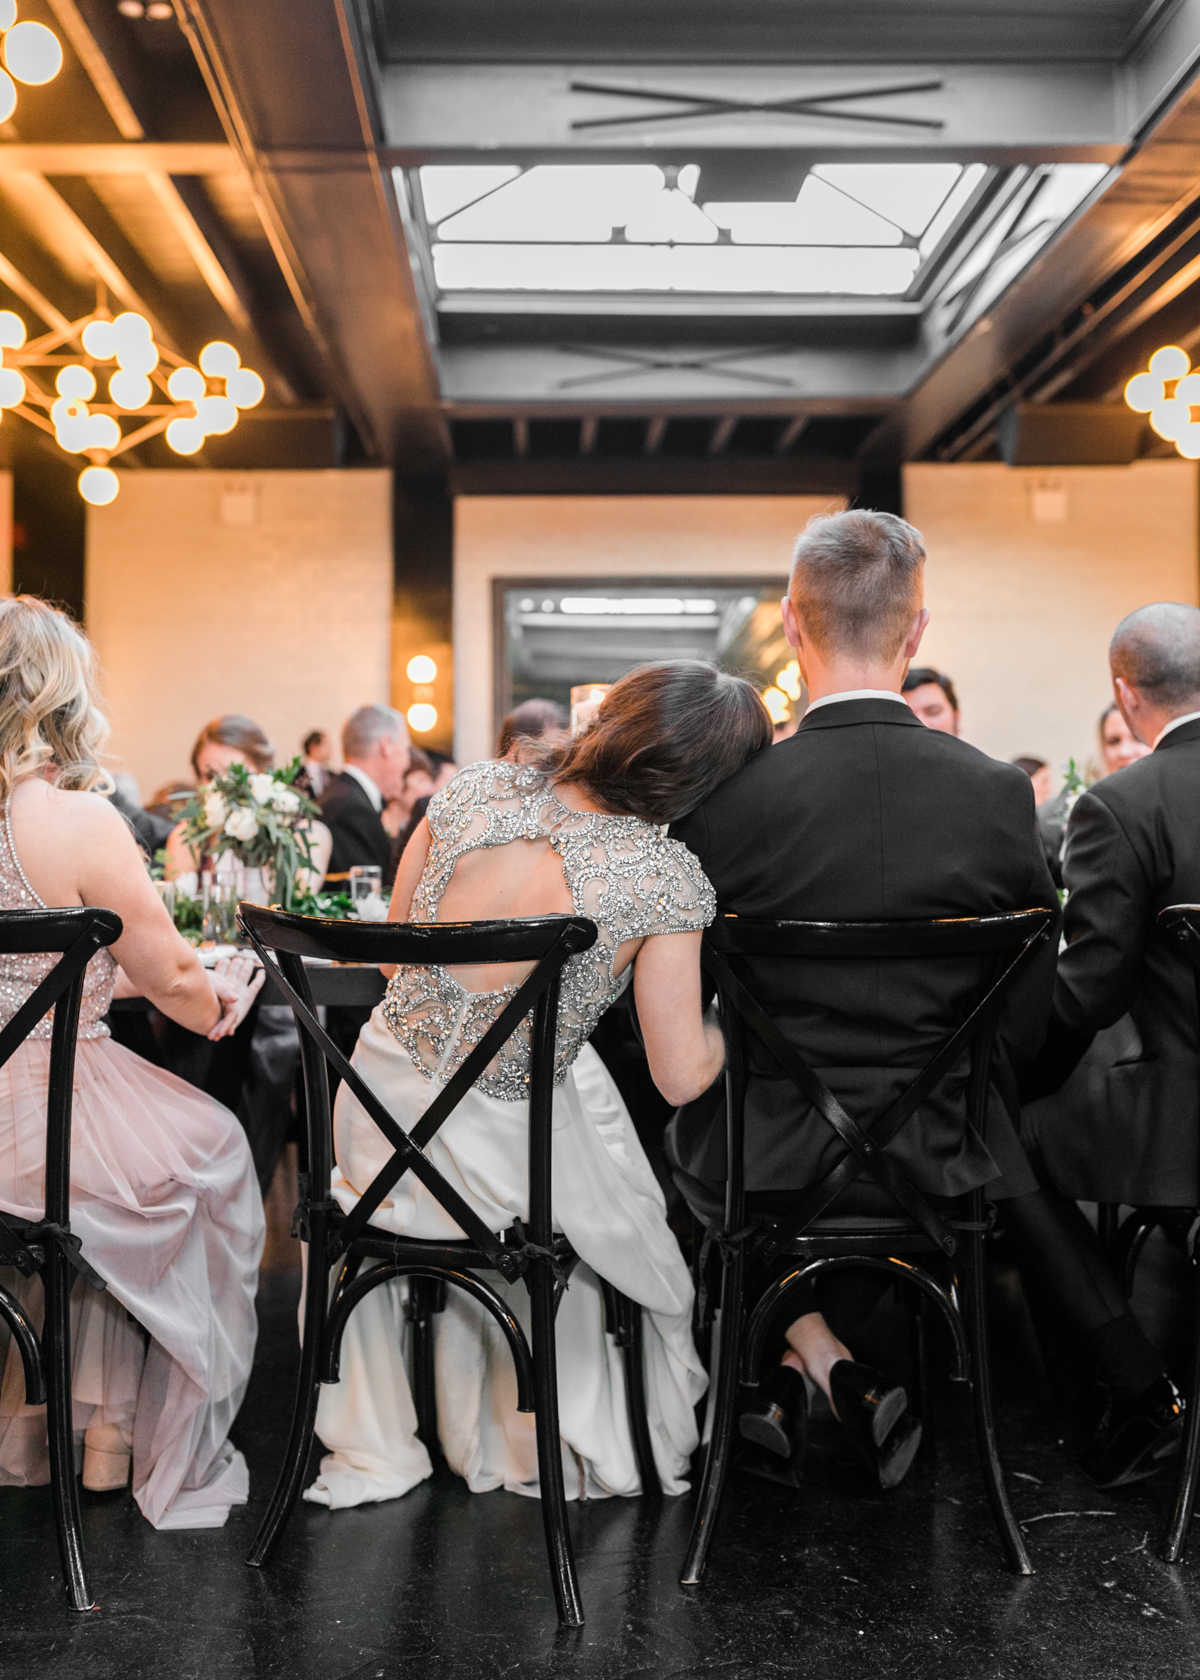 New York City wedding photographer | 501 Union wedding reception | Bride & groom at wedding reception | Bride in Jenny Packham gown | Groom in Black Tux | Brooklyn wedding venue